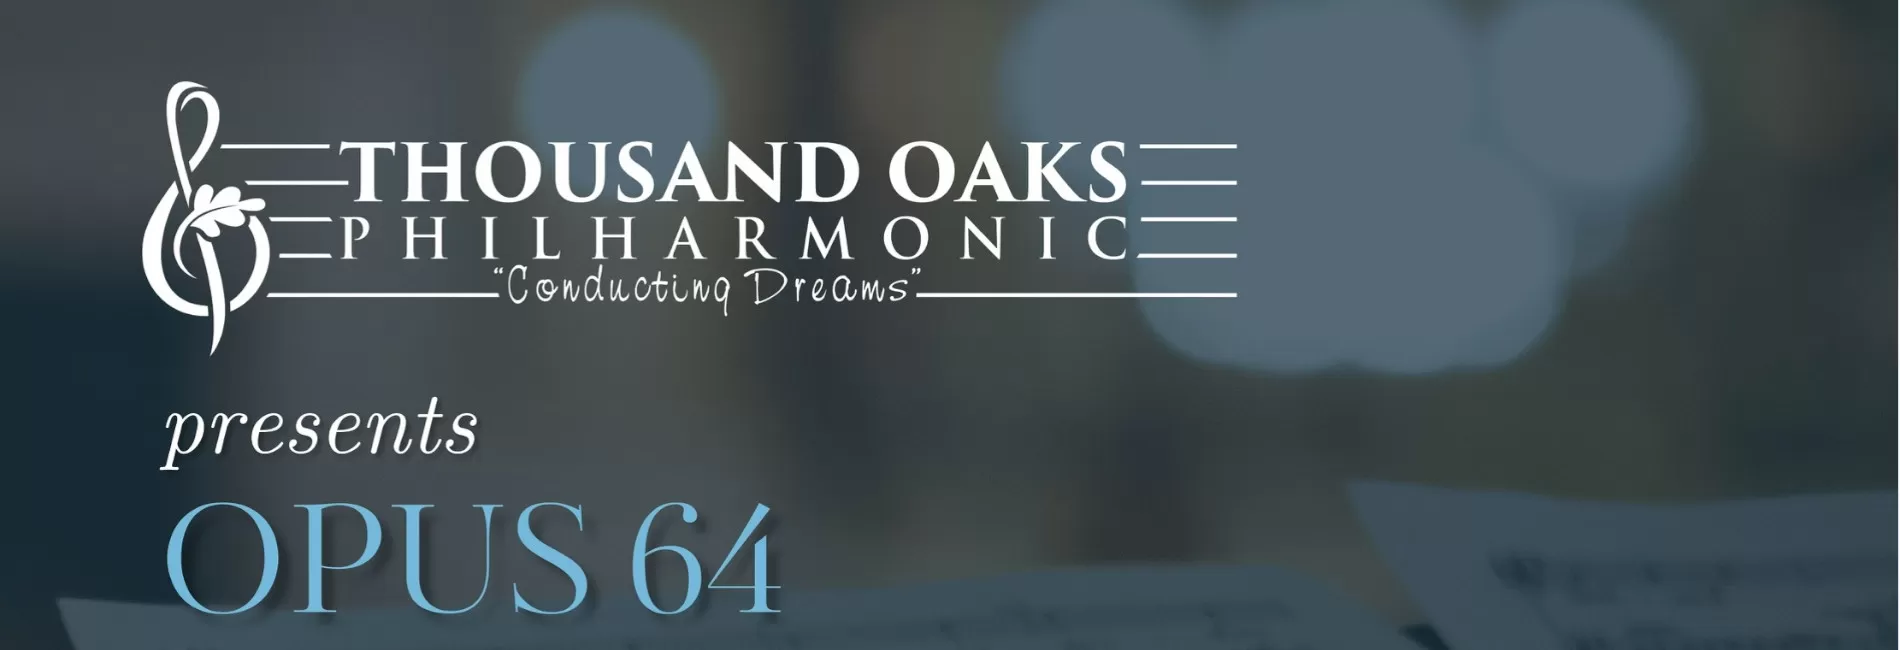 Thousand Oaks Philharmonic OPUS 64